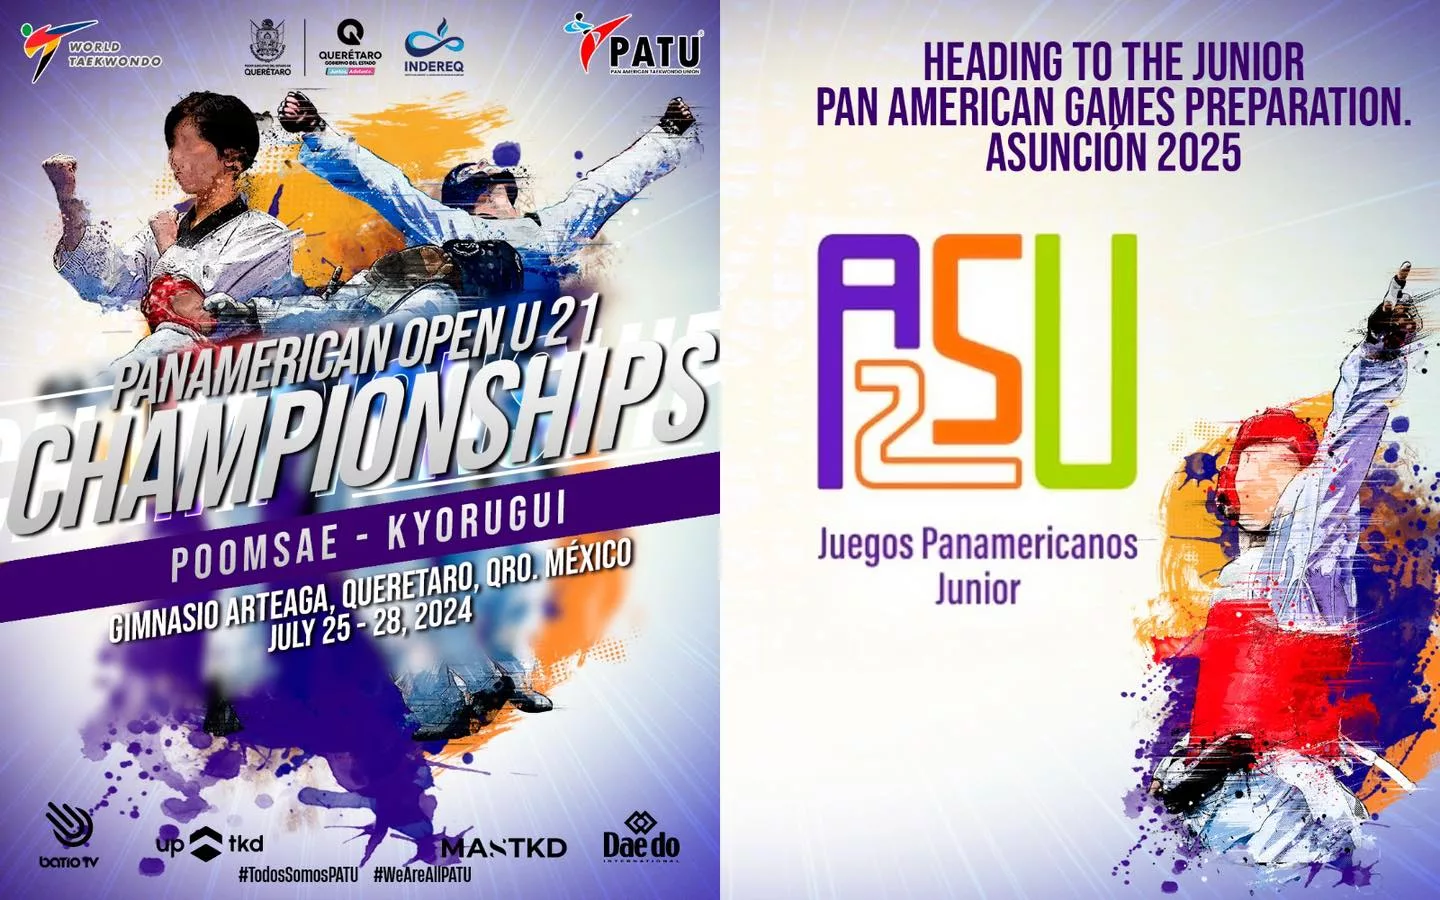 Pan American U-21 Championships in Querétaro: Prelude to the Junior Pan American Games, Asunción 2025